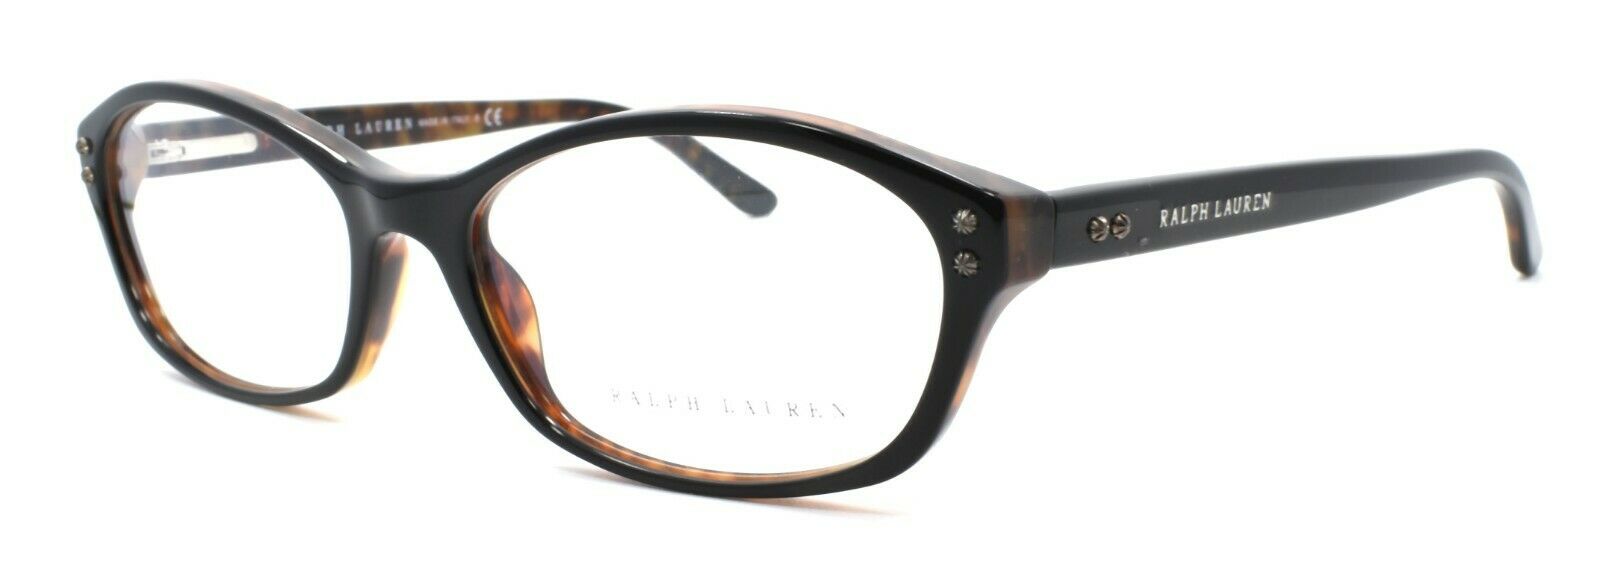 1-Ralph Lauren RL6091 5260 Women's Eyeglasses Frames 53-16-135 Black / Havana-713132447994-IKSpecs